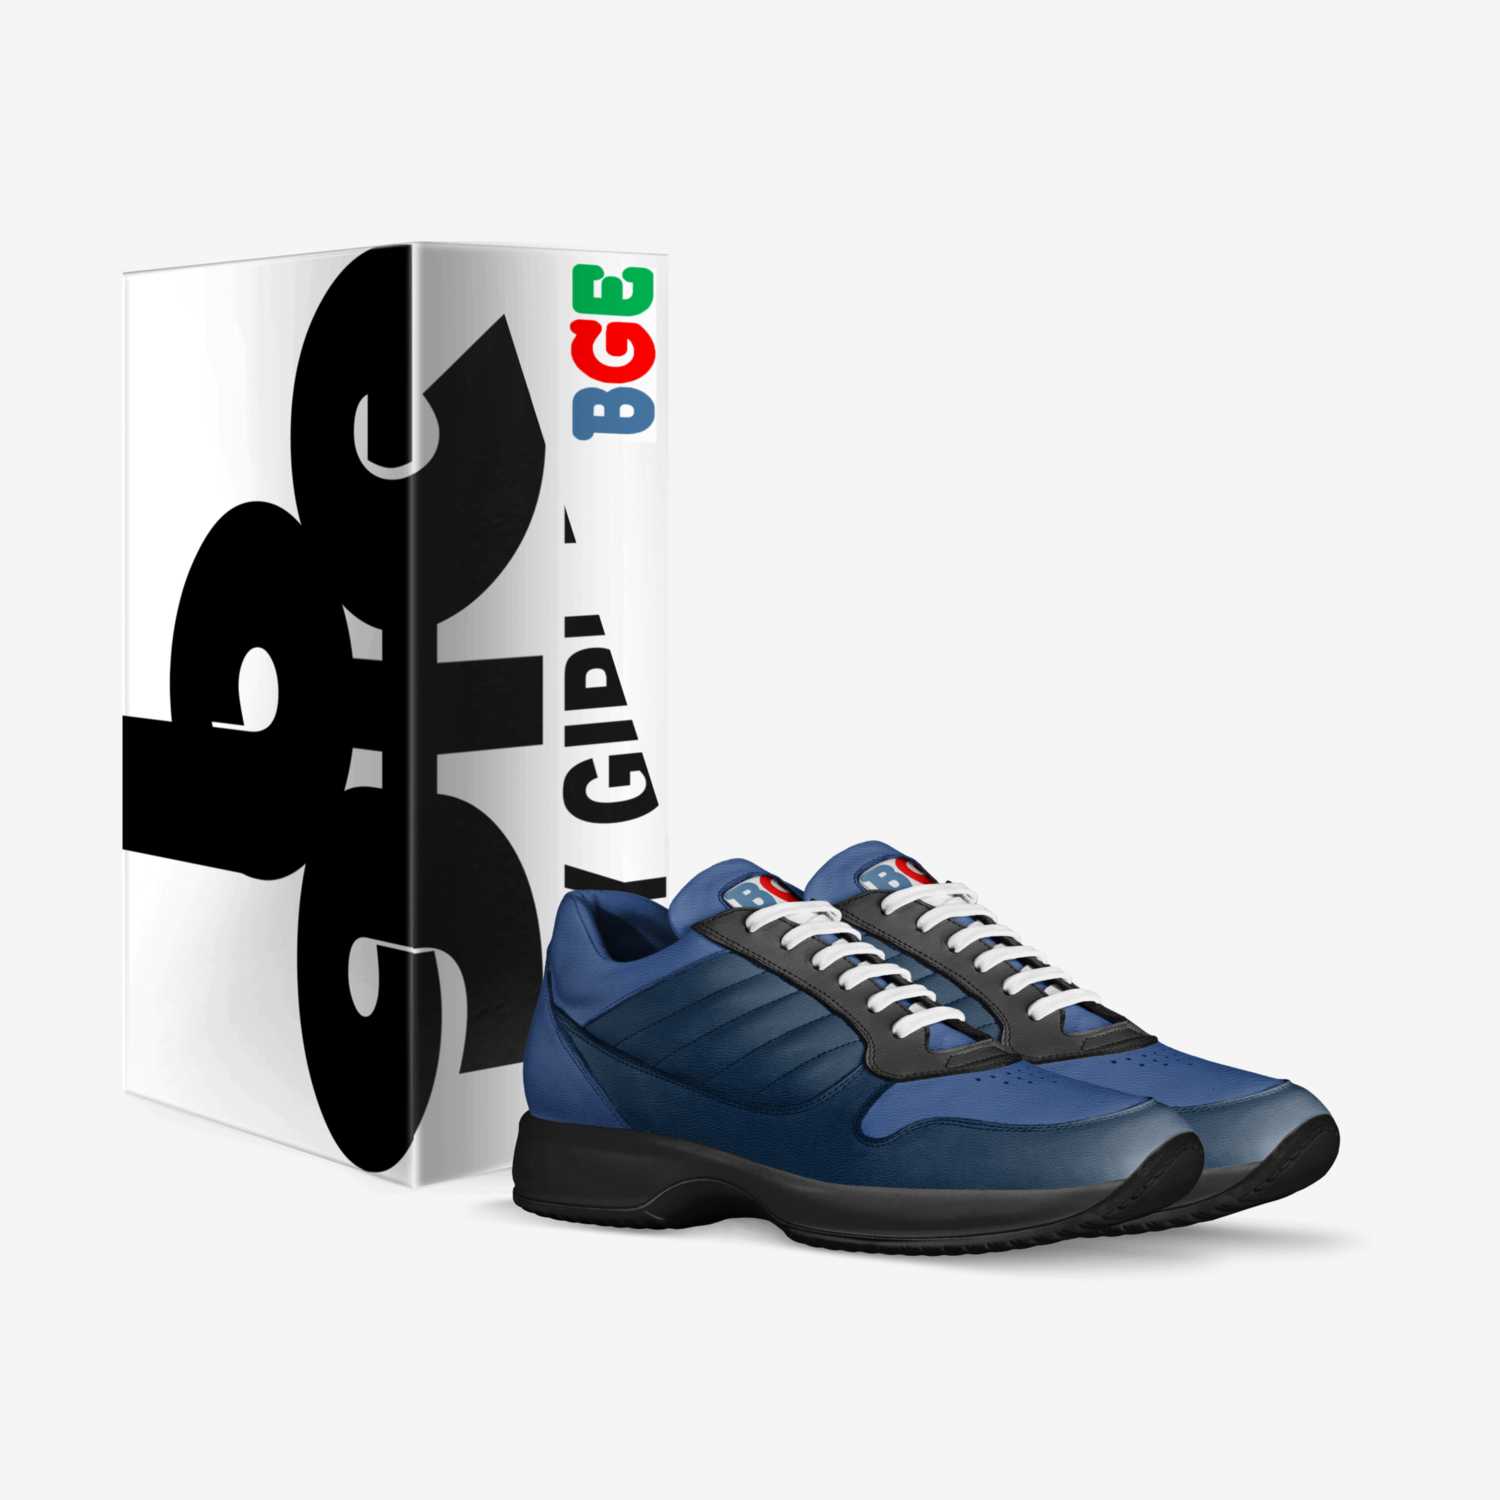 Cuz Cuz AdaGio custom made in Italy shoes by Baby-girl Elite | Box view